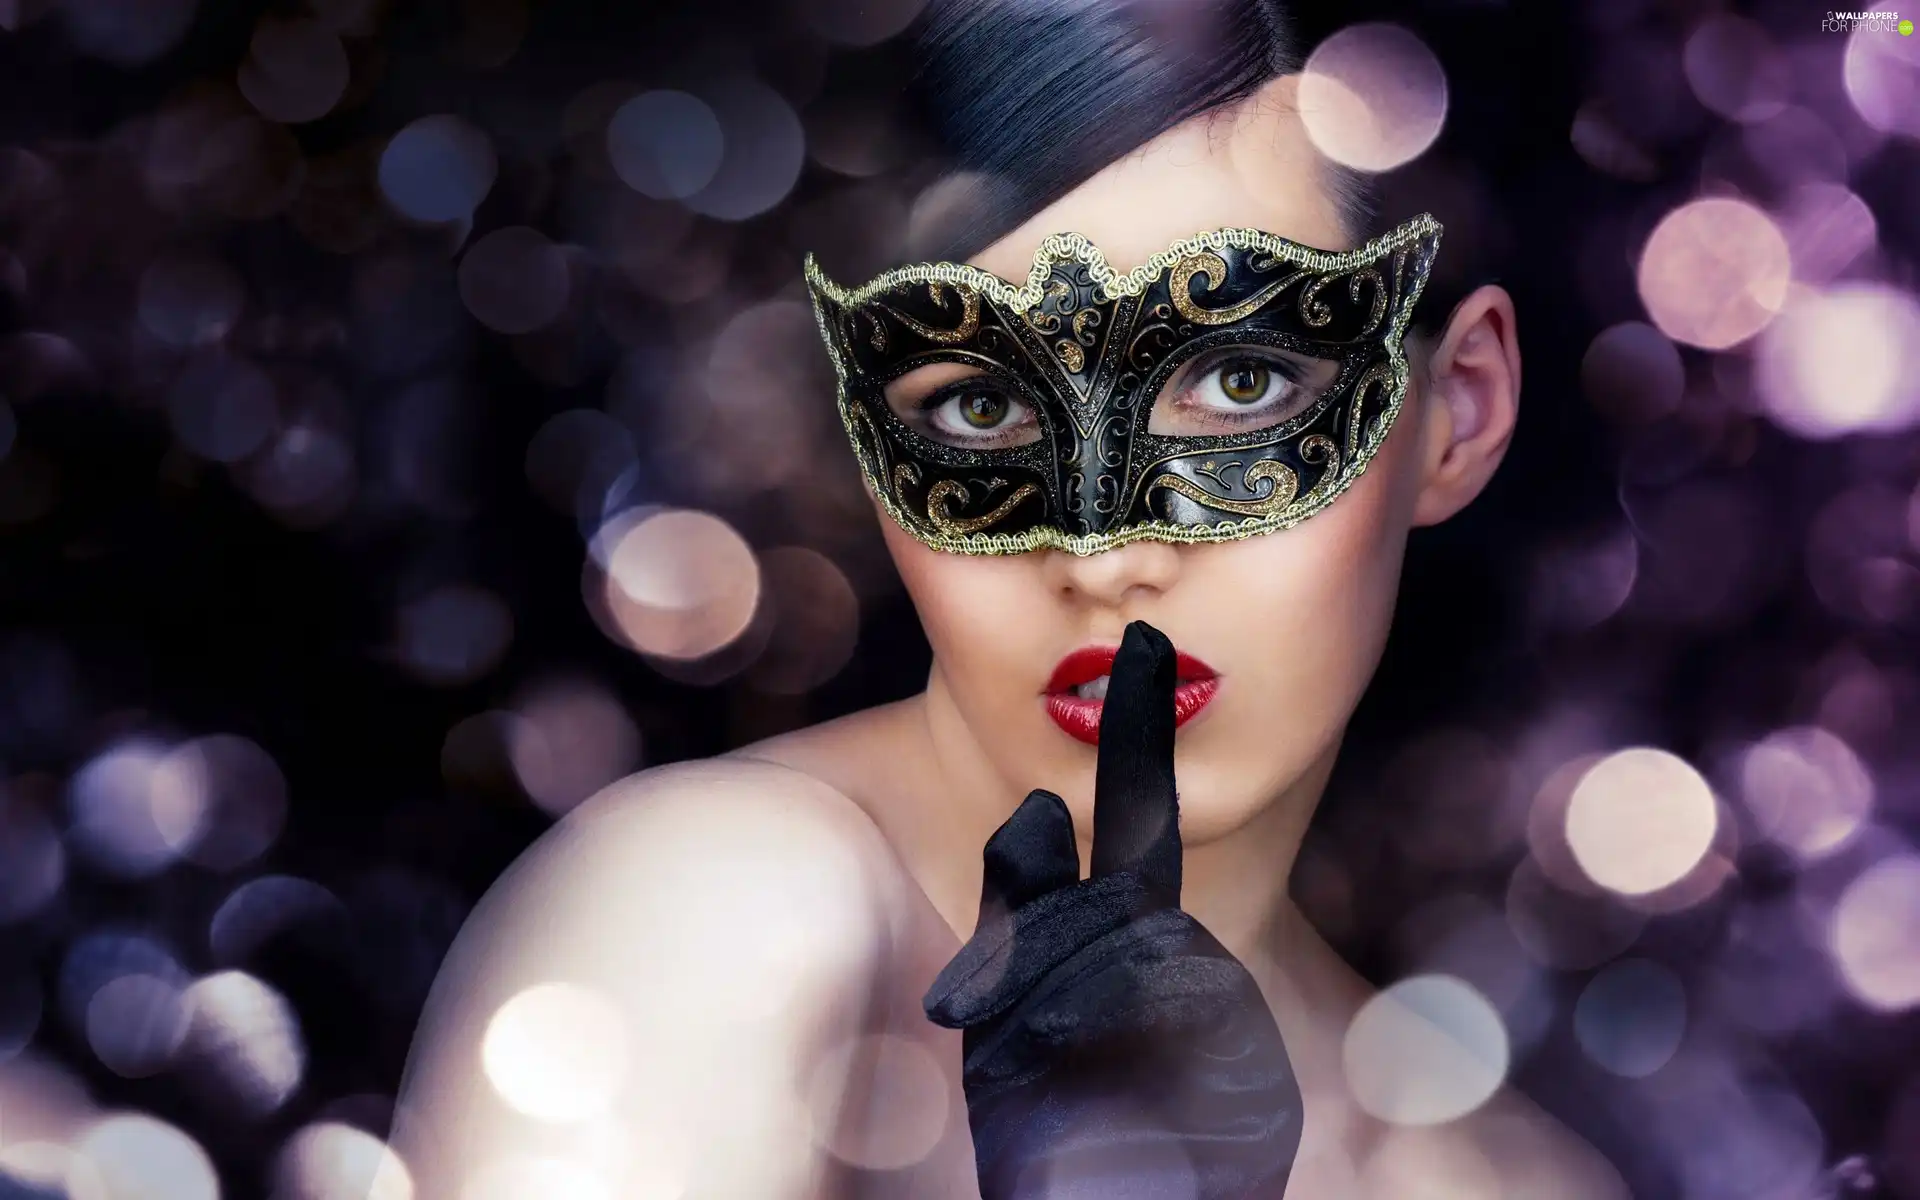 In Mask, Beauty, Handglove, lights, black, Women